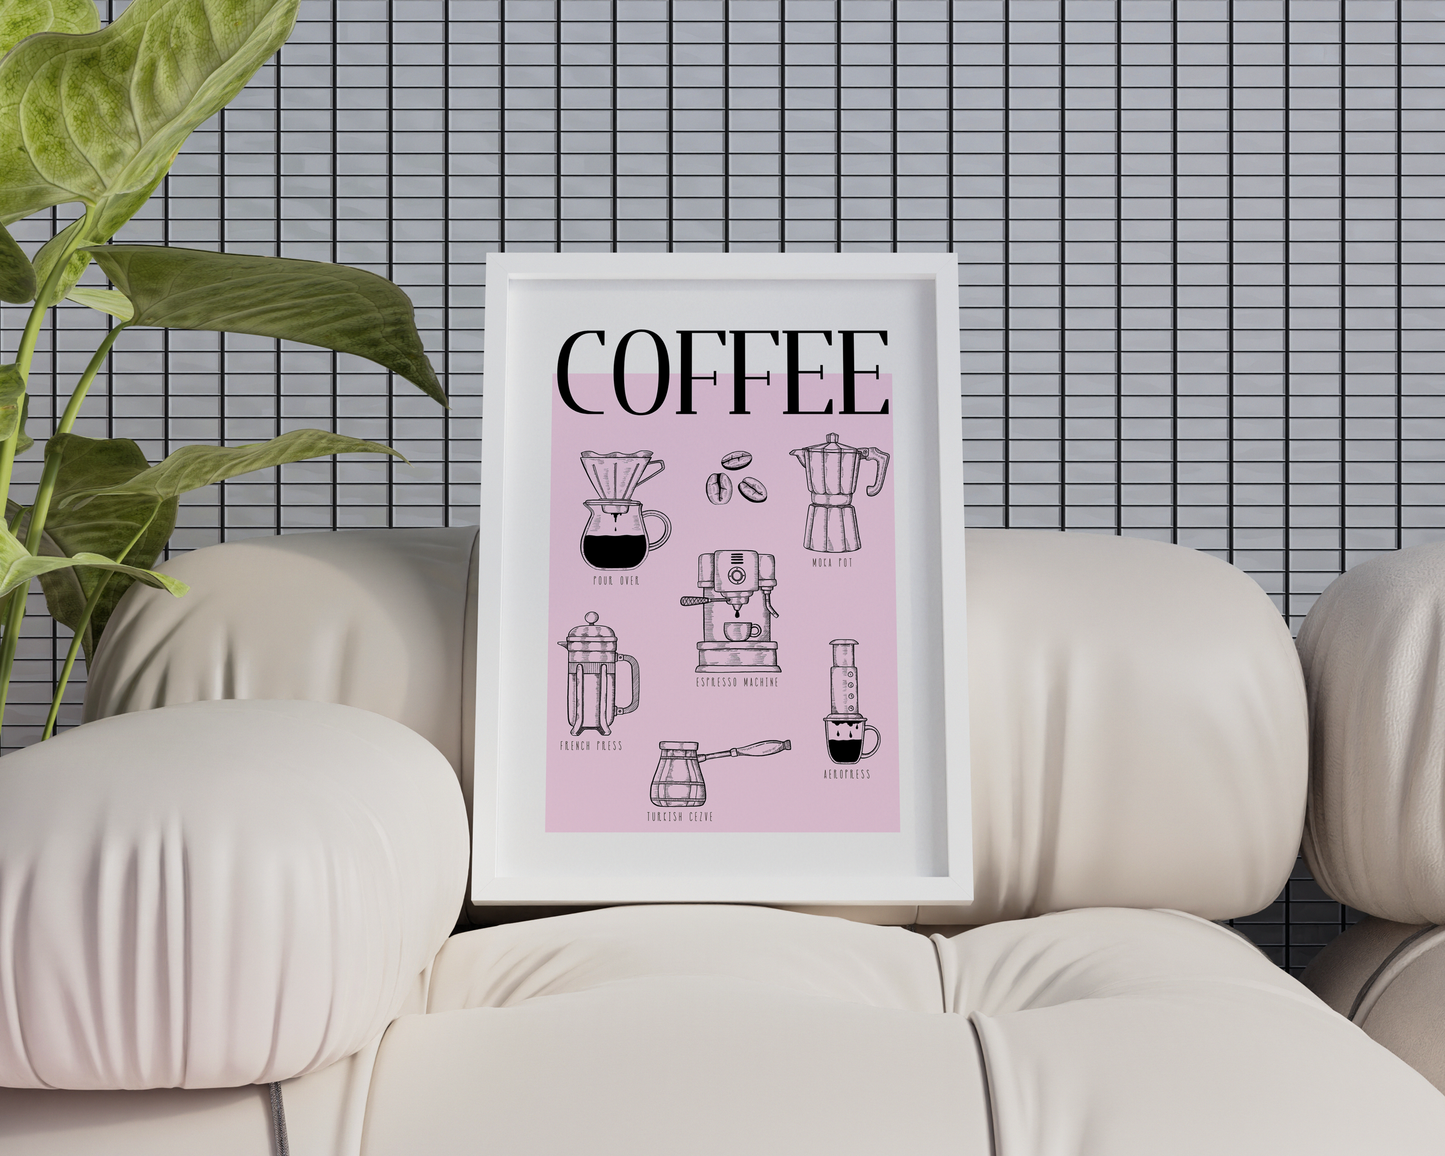 Coffee Brewing Methods Pink Poster